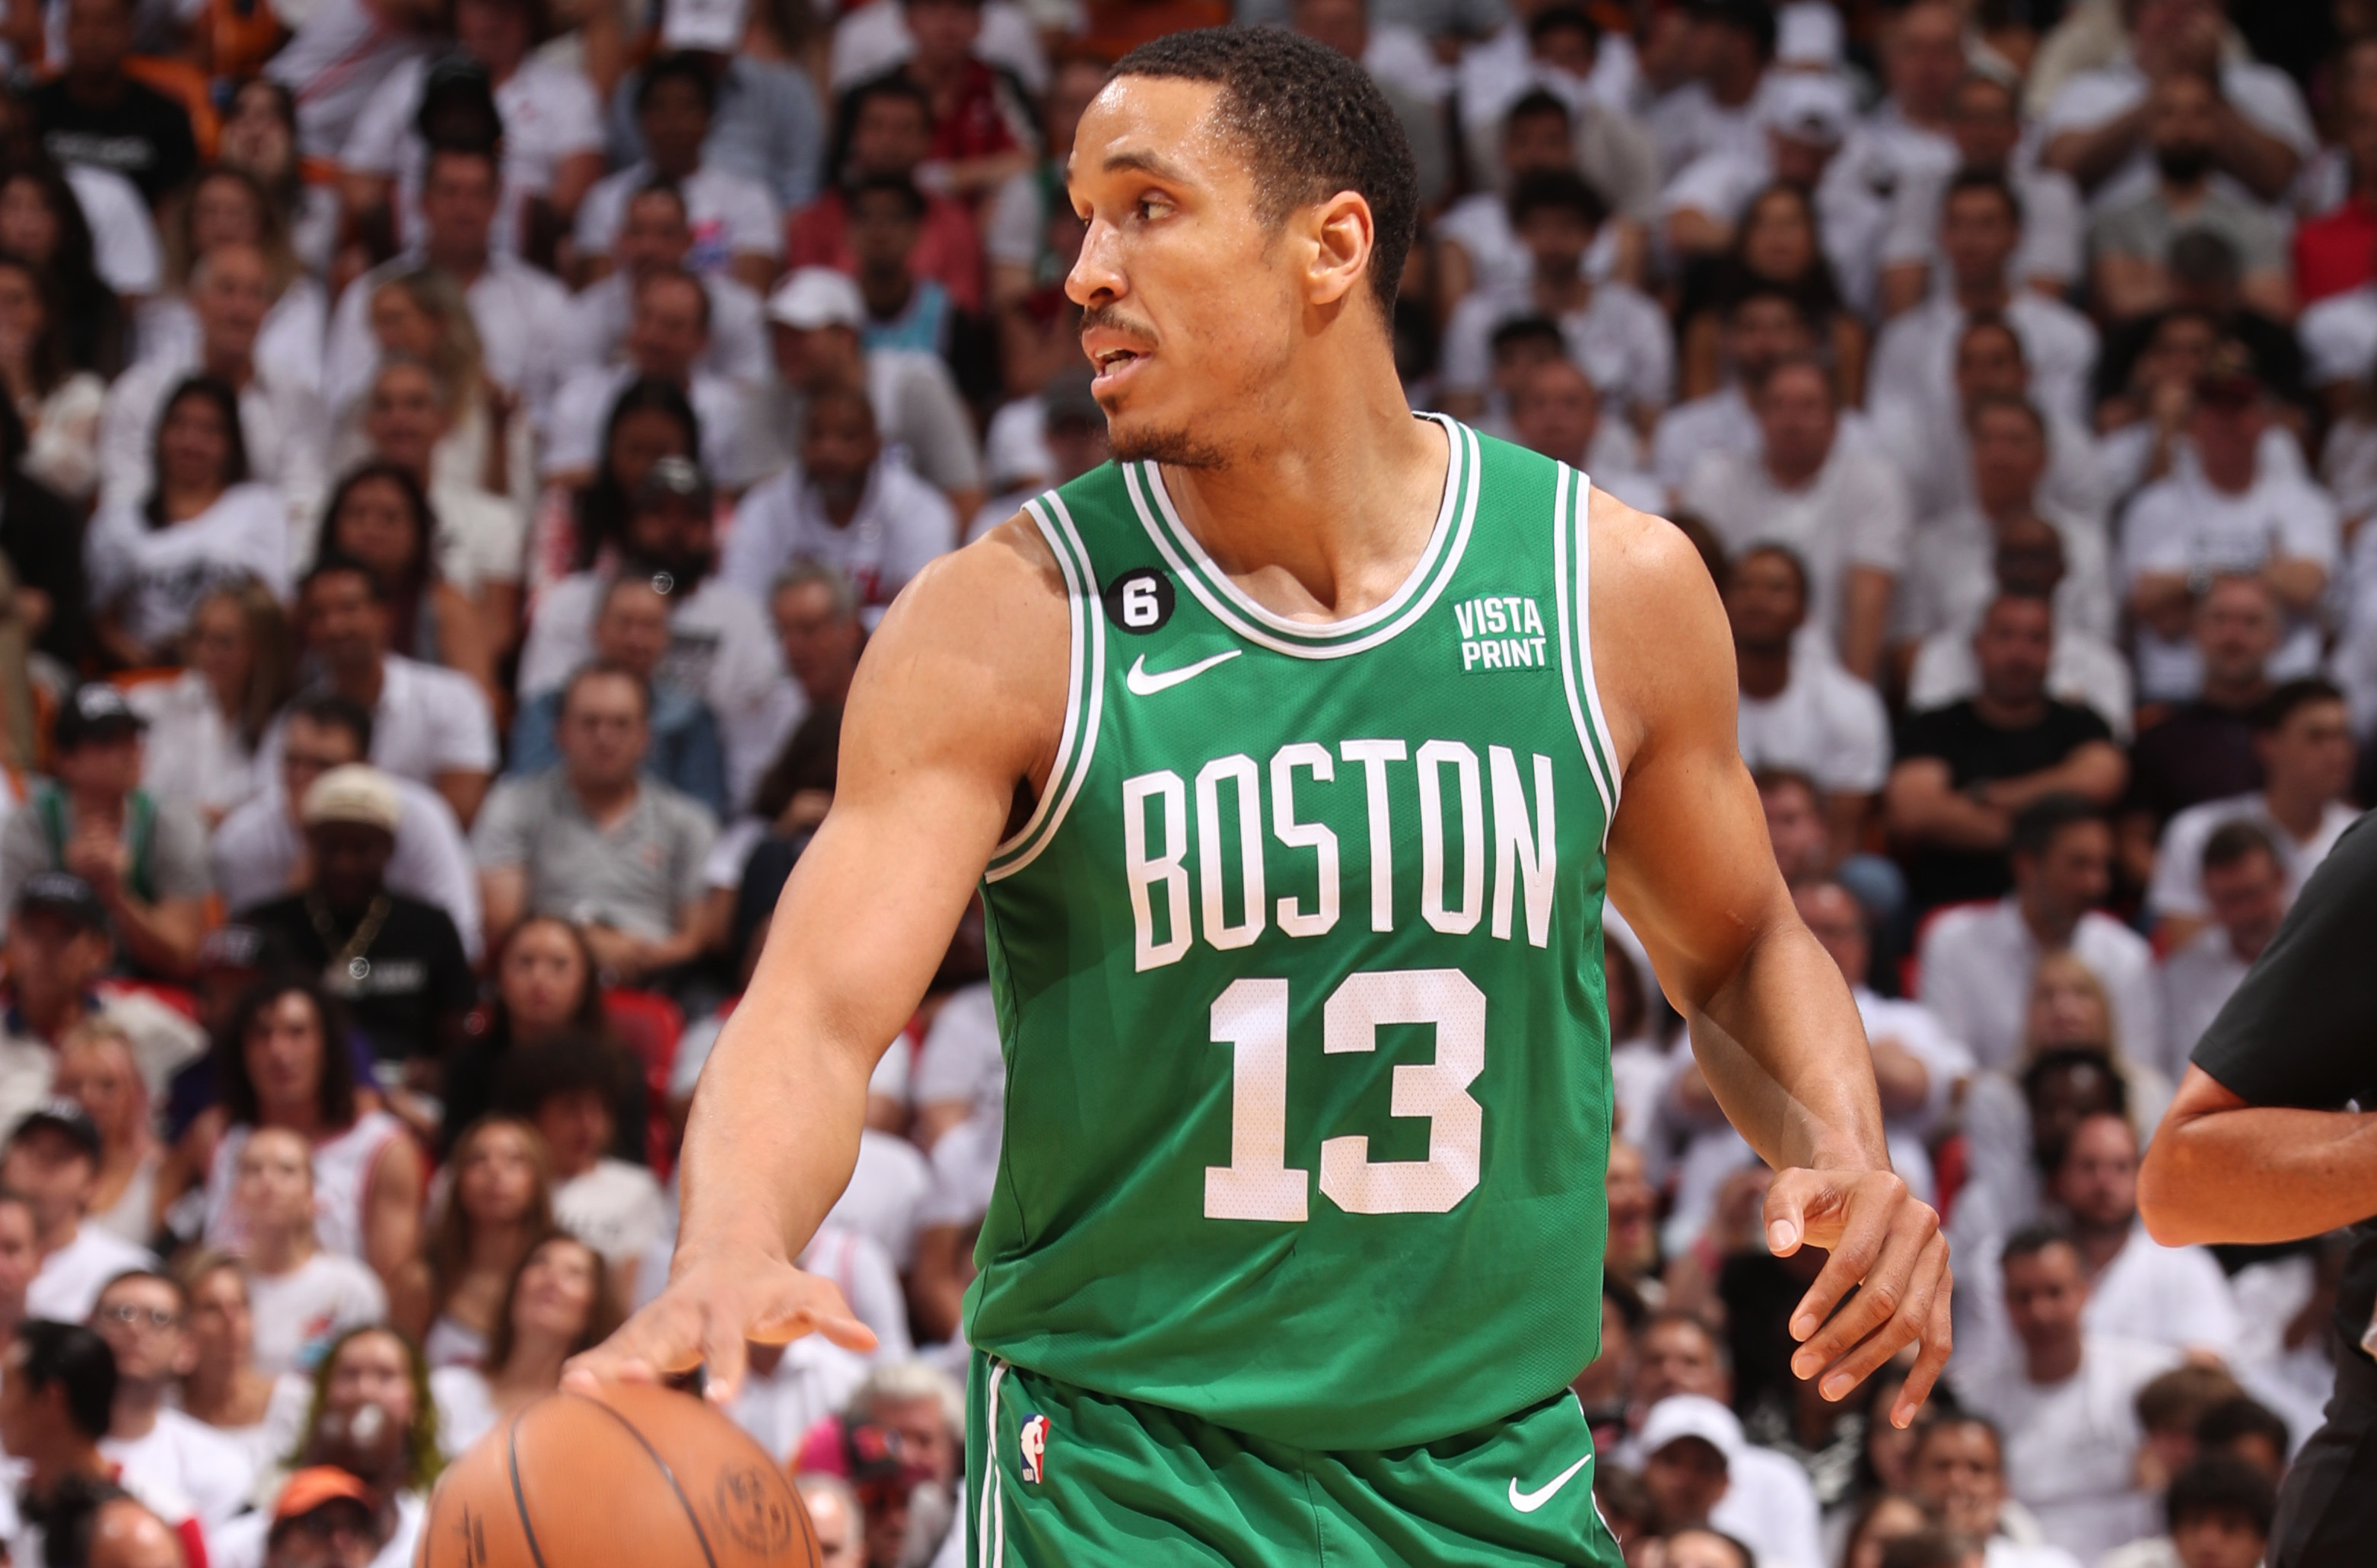 Draymond Green says Boston Celtics fans threw racial slurs at him